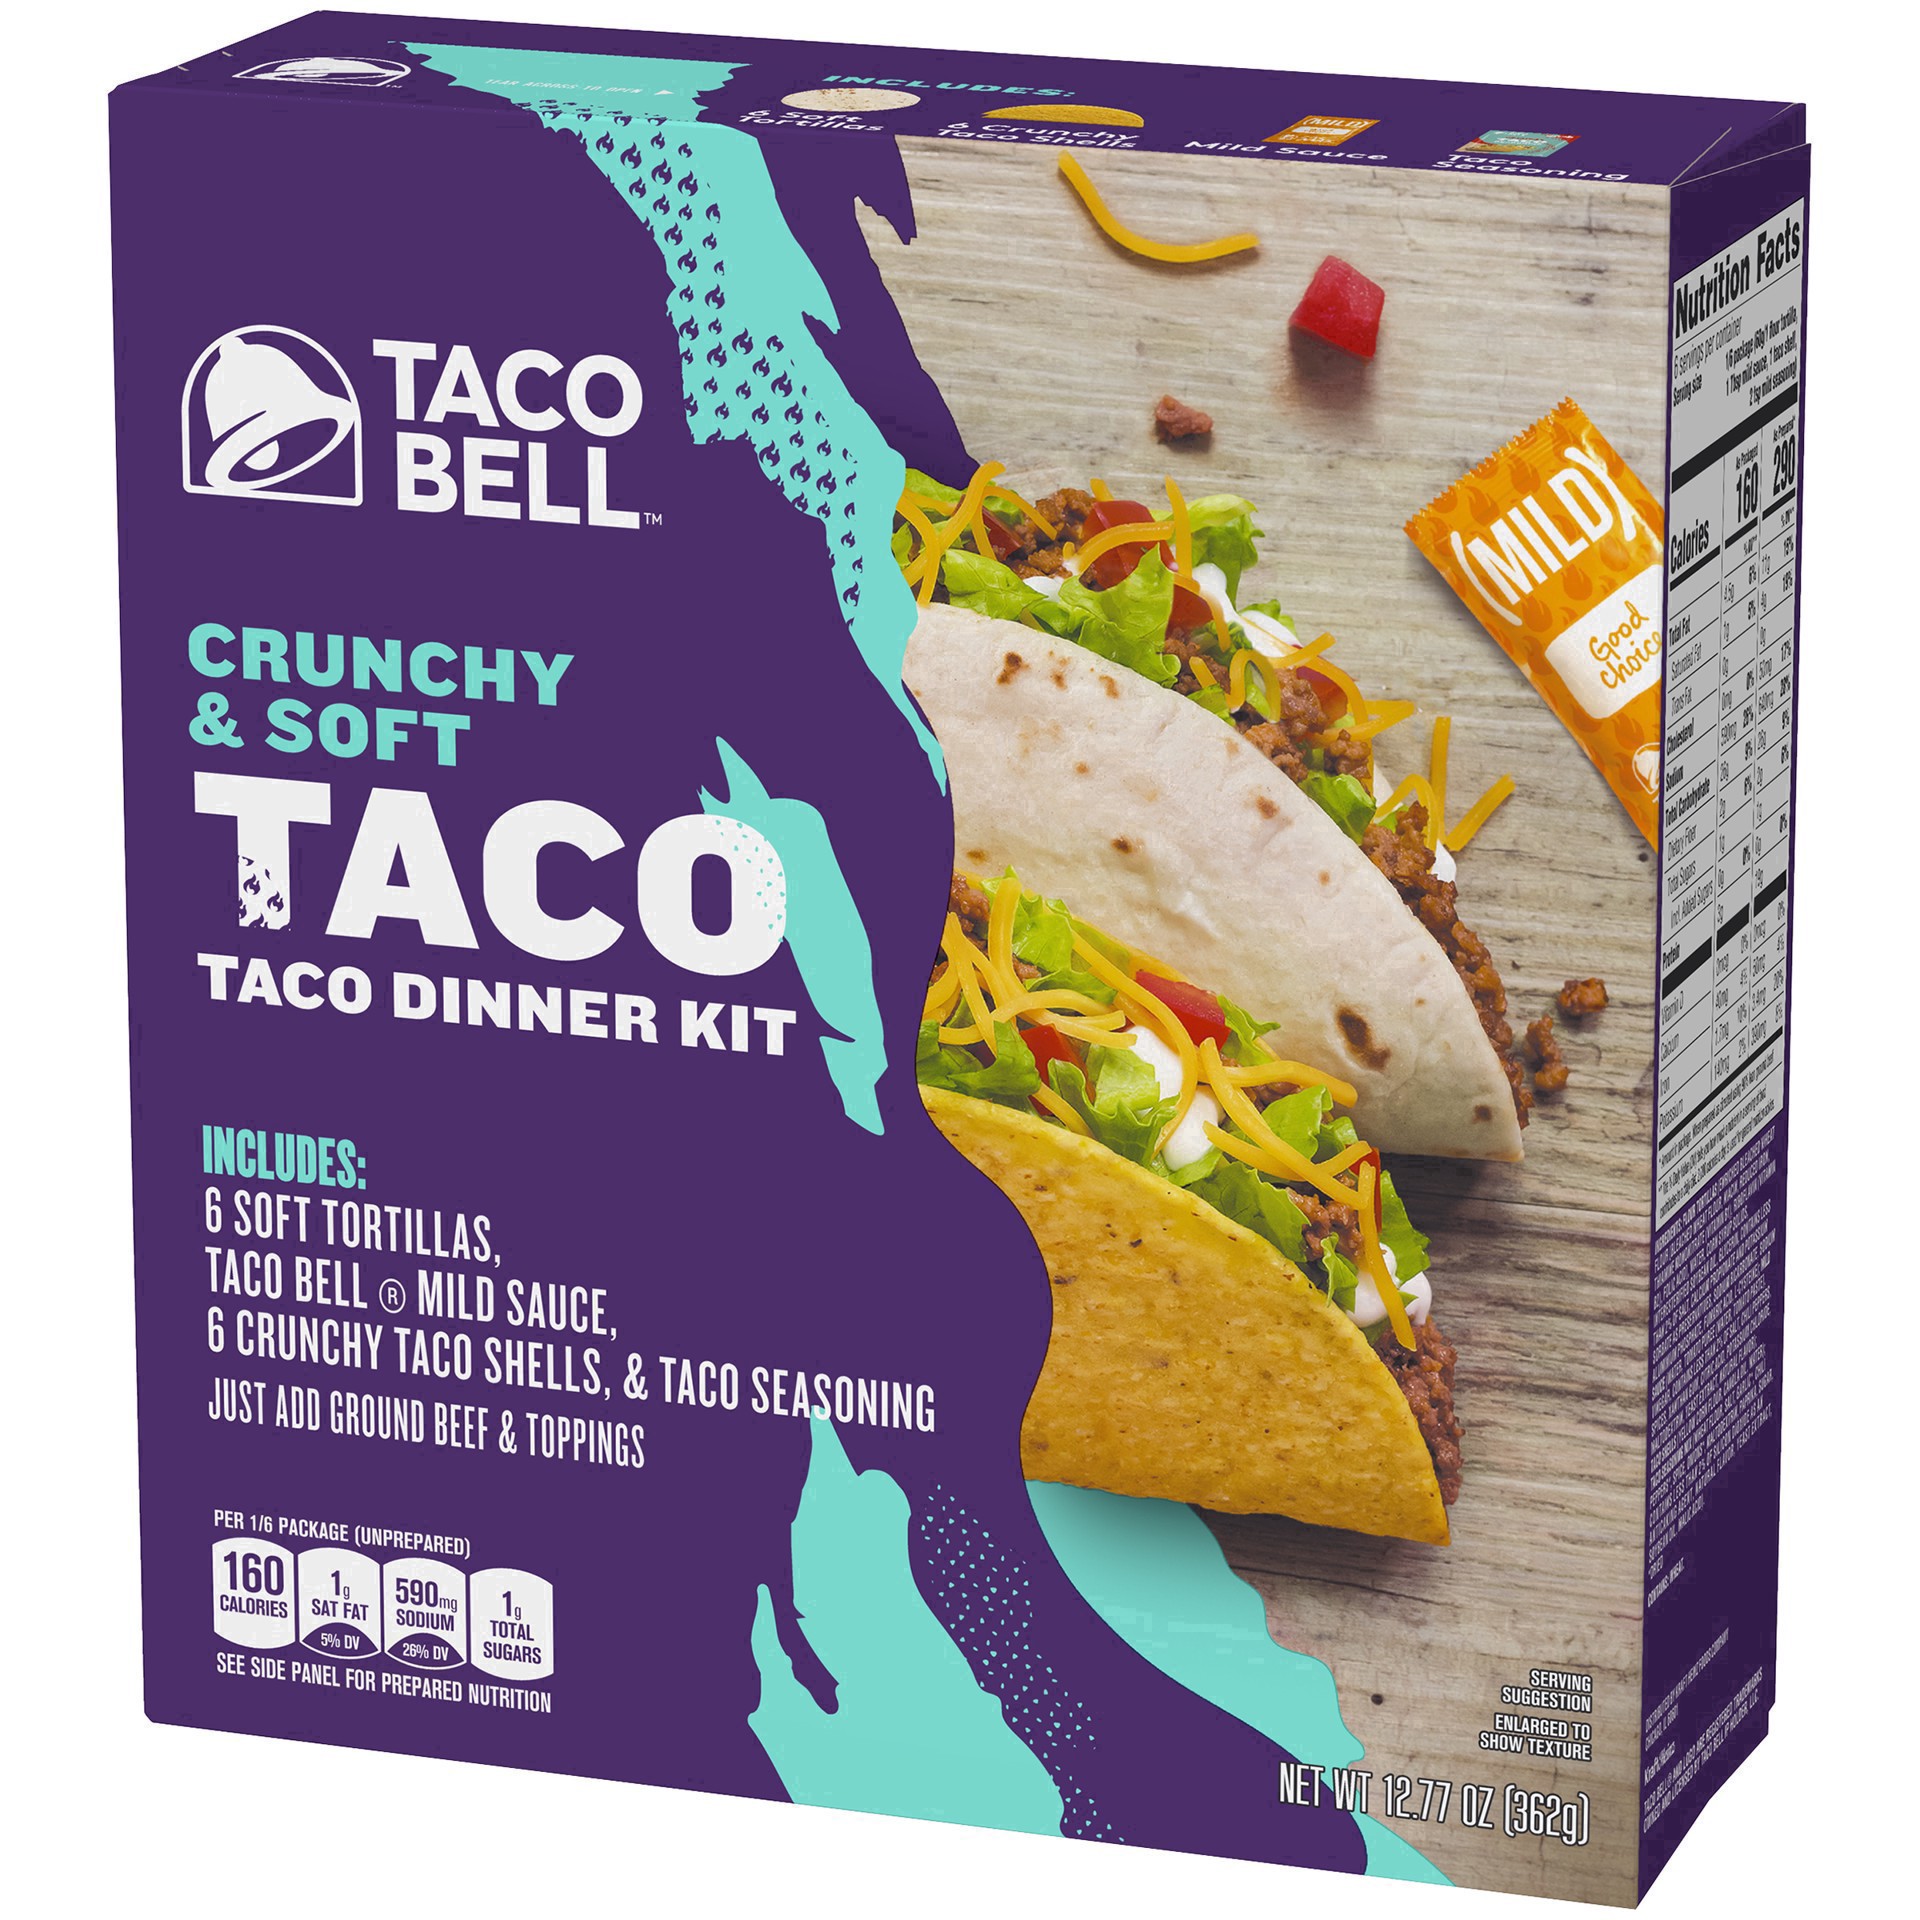 slide 26 of 101, Taco Bell Crunchy & Soft Taco Cravings Kit with 6 Soft Tortillas, 6 Crunchy Taco Shells, Taco Bell Mild Sauce & Seasoning, 12.77 oz Box, 1 ct